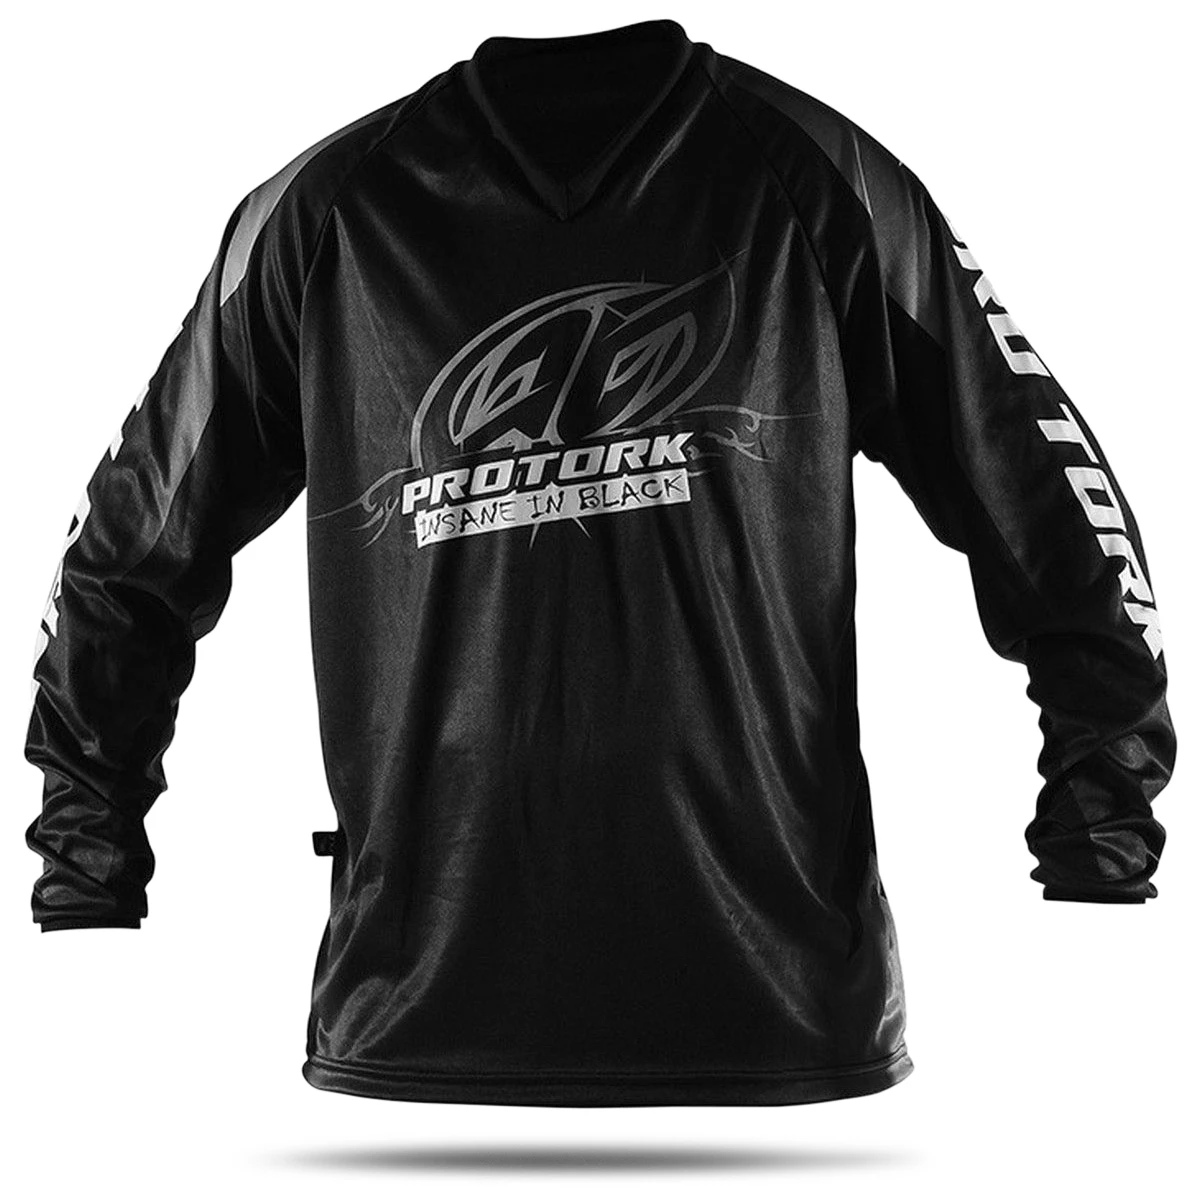 Camisa Motocross Insane in Black Pro Tork